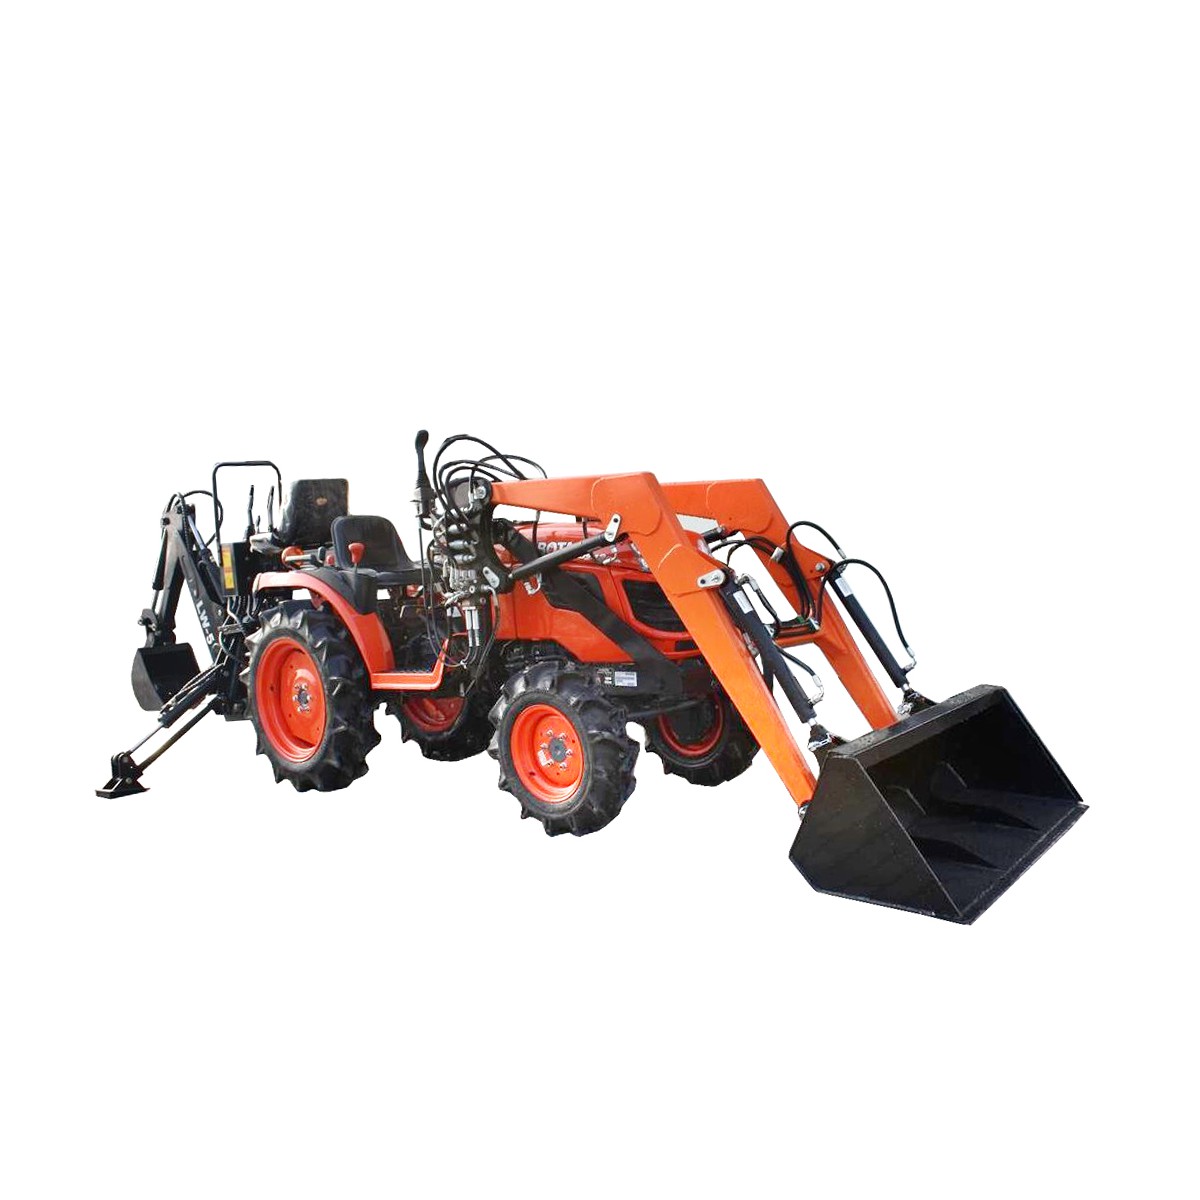 Kubota B2420 4x4 - 24KM + LAD-3 TUR front loader + excavator for LW-5 4FARMER tractor